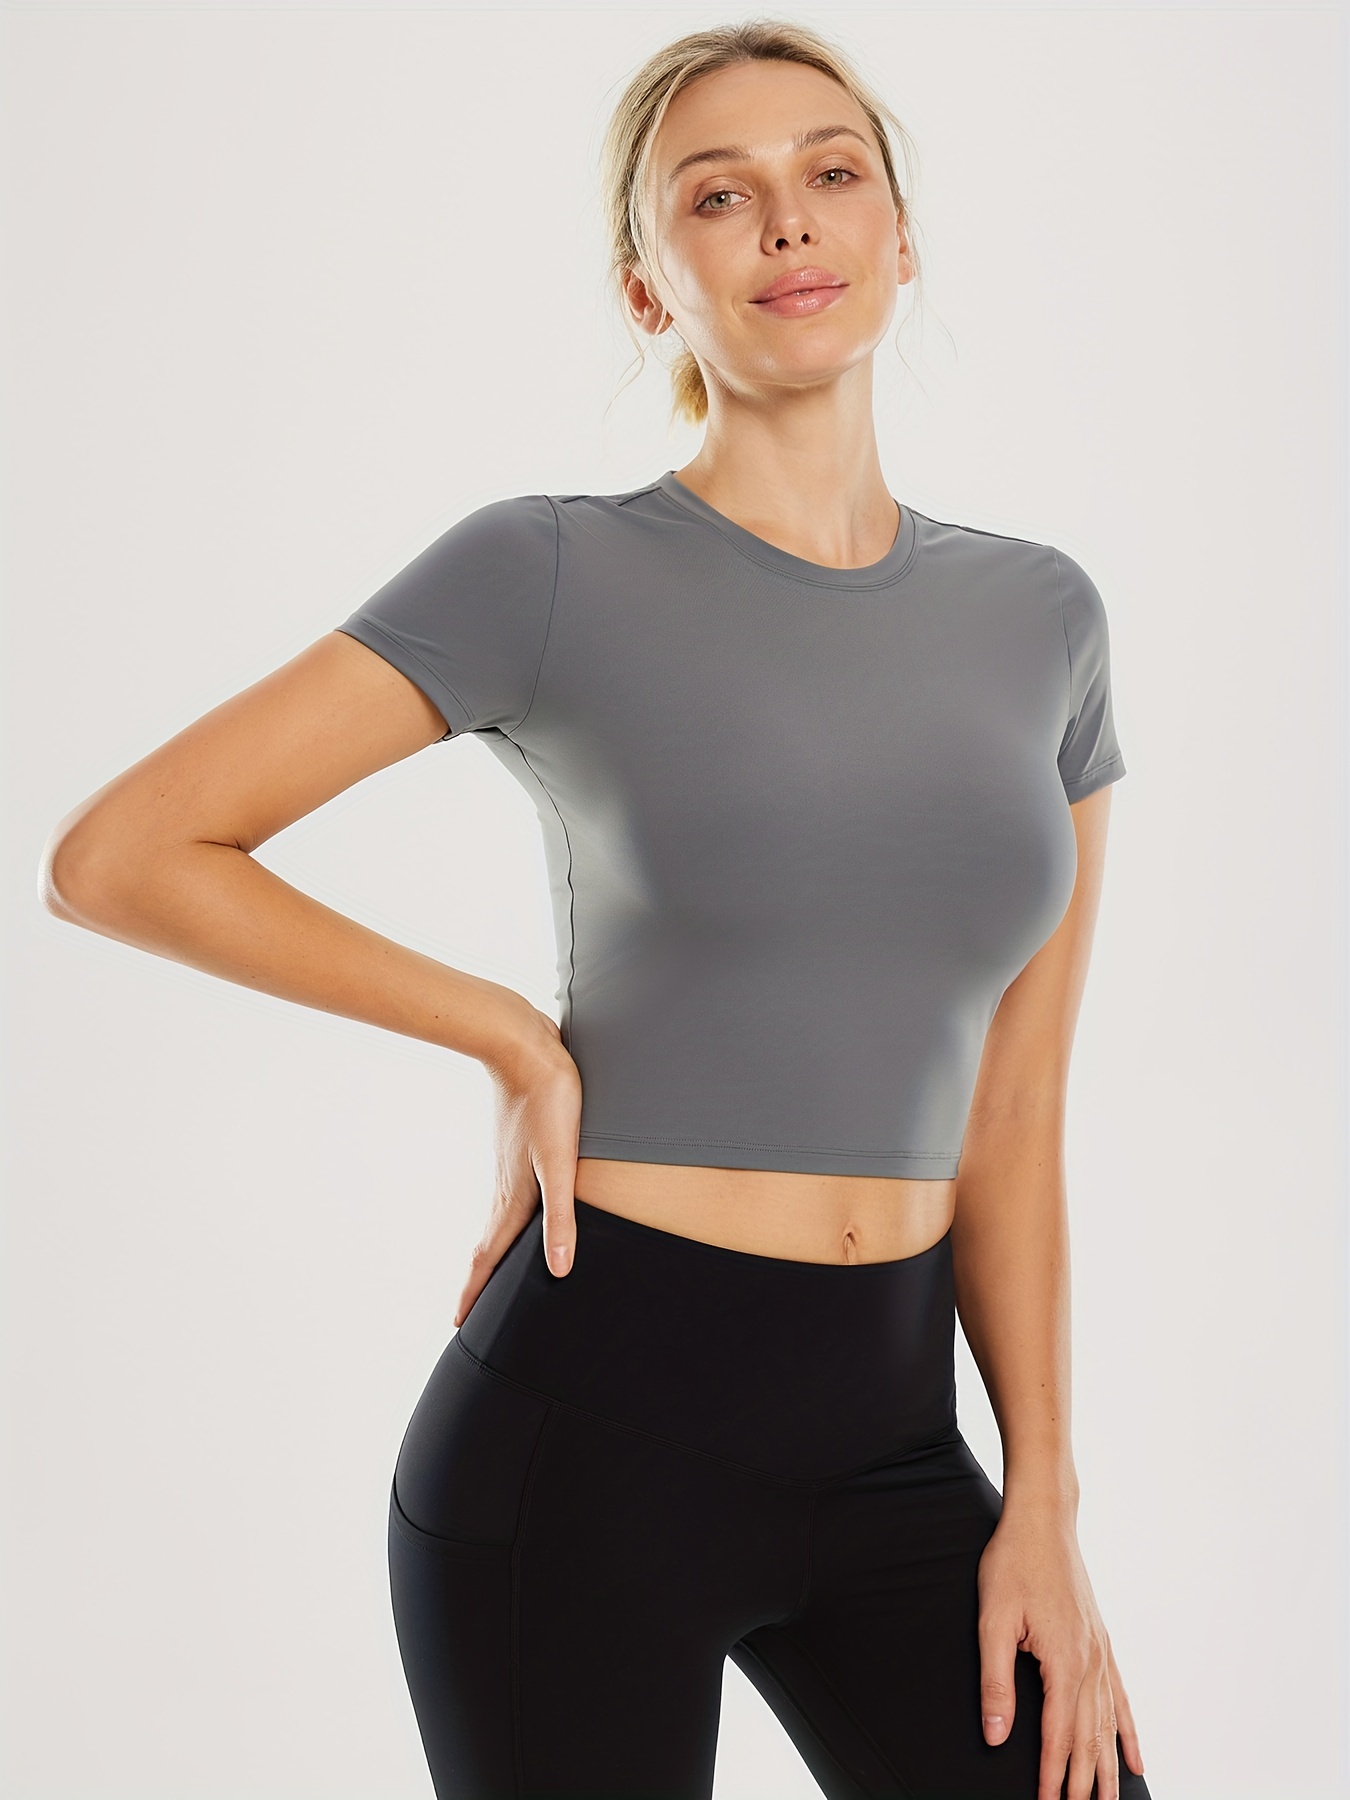 BALEAF Women's Long Sleeve Crop Workout Shirts Slim Fit Tops for